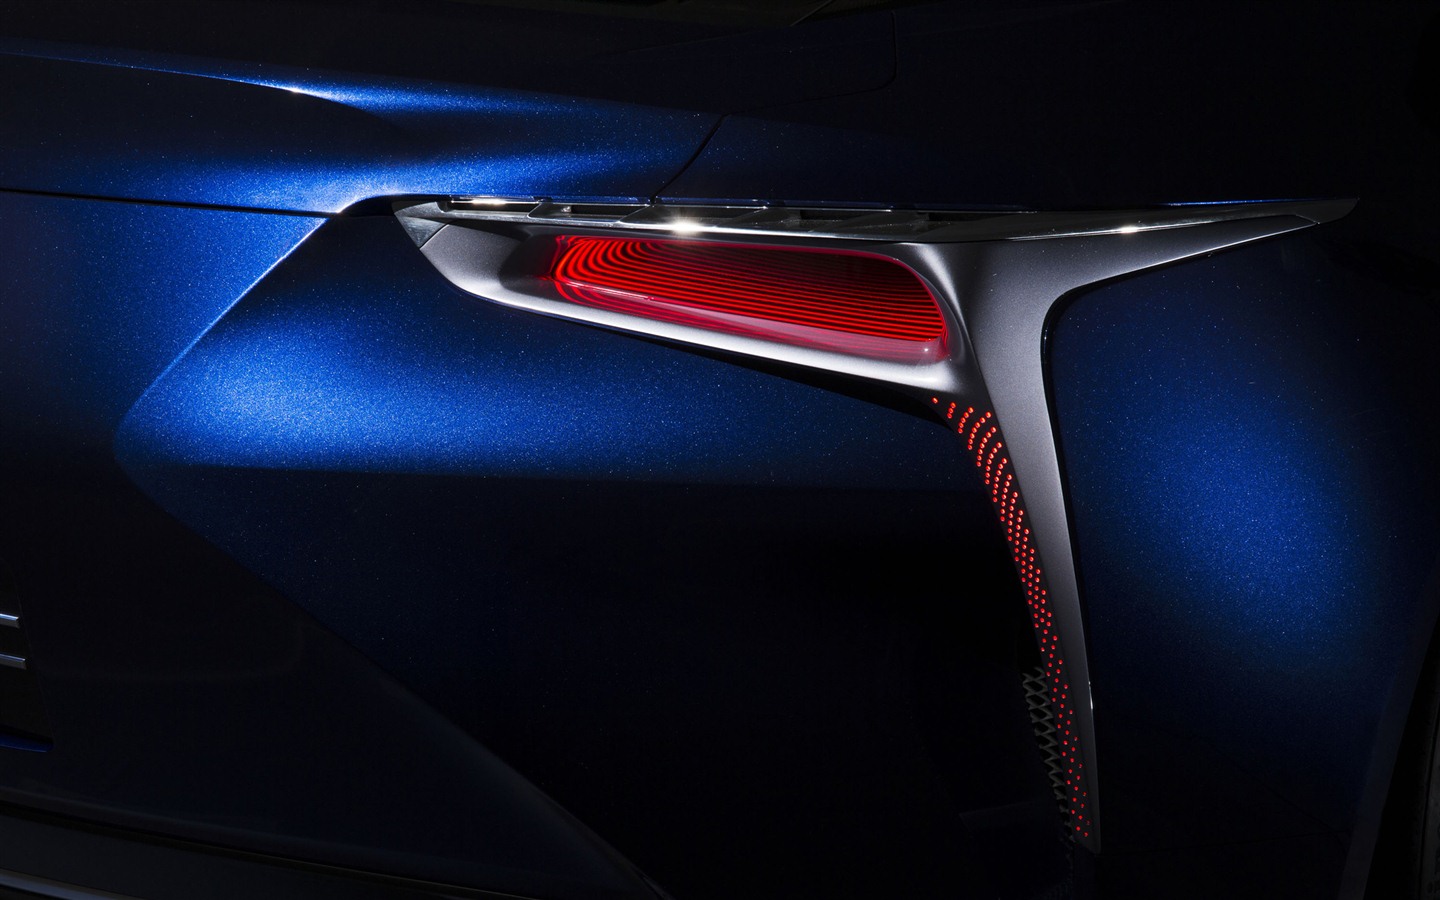 2012 Lexus LF-LC Blue concept 雷克萨斯 蓝色概念车 高清壁纸13 - 1440x900